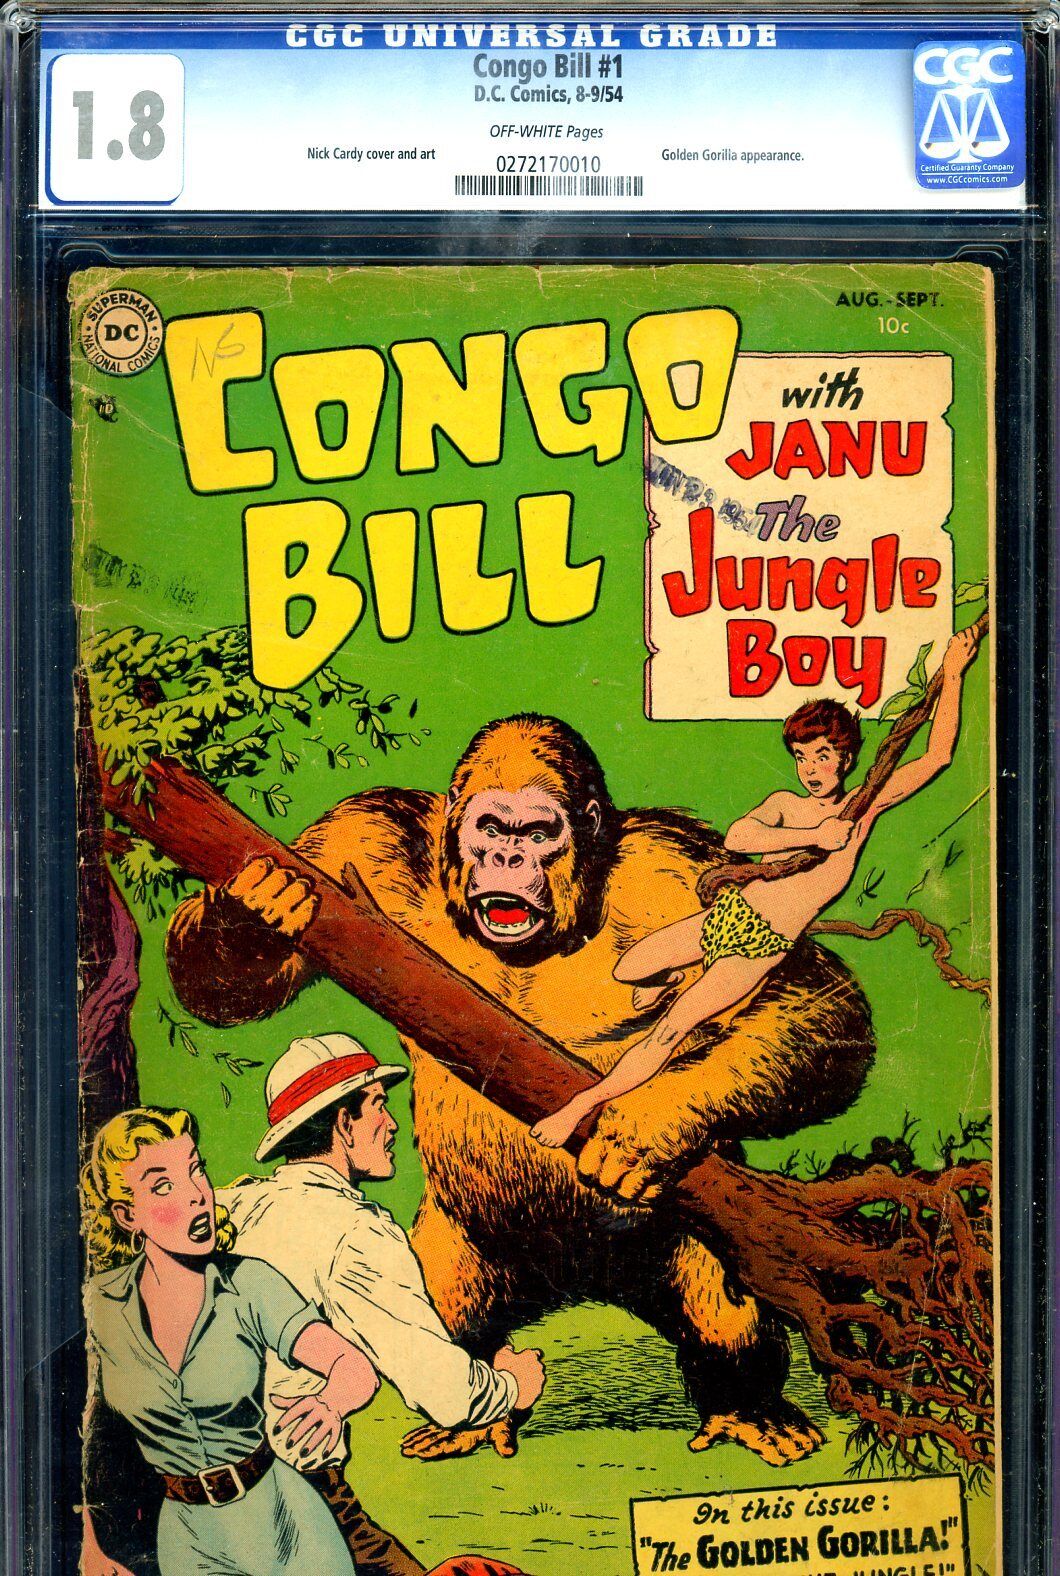 Congo Bill #1 CGC GRADED 1.8 - Nick Cardy cover/art - Golden Gorilla appearance